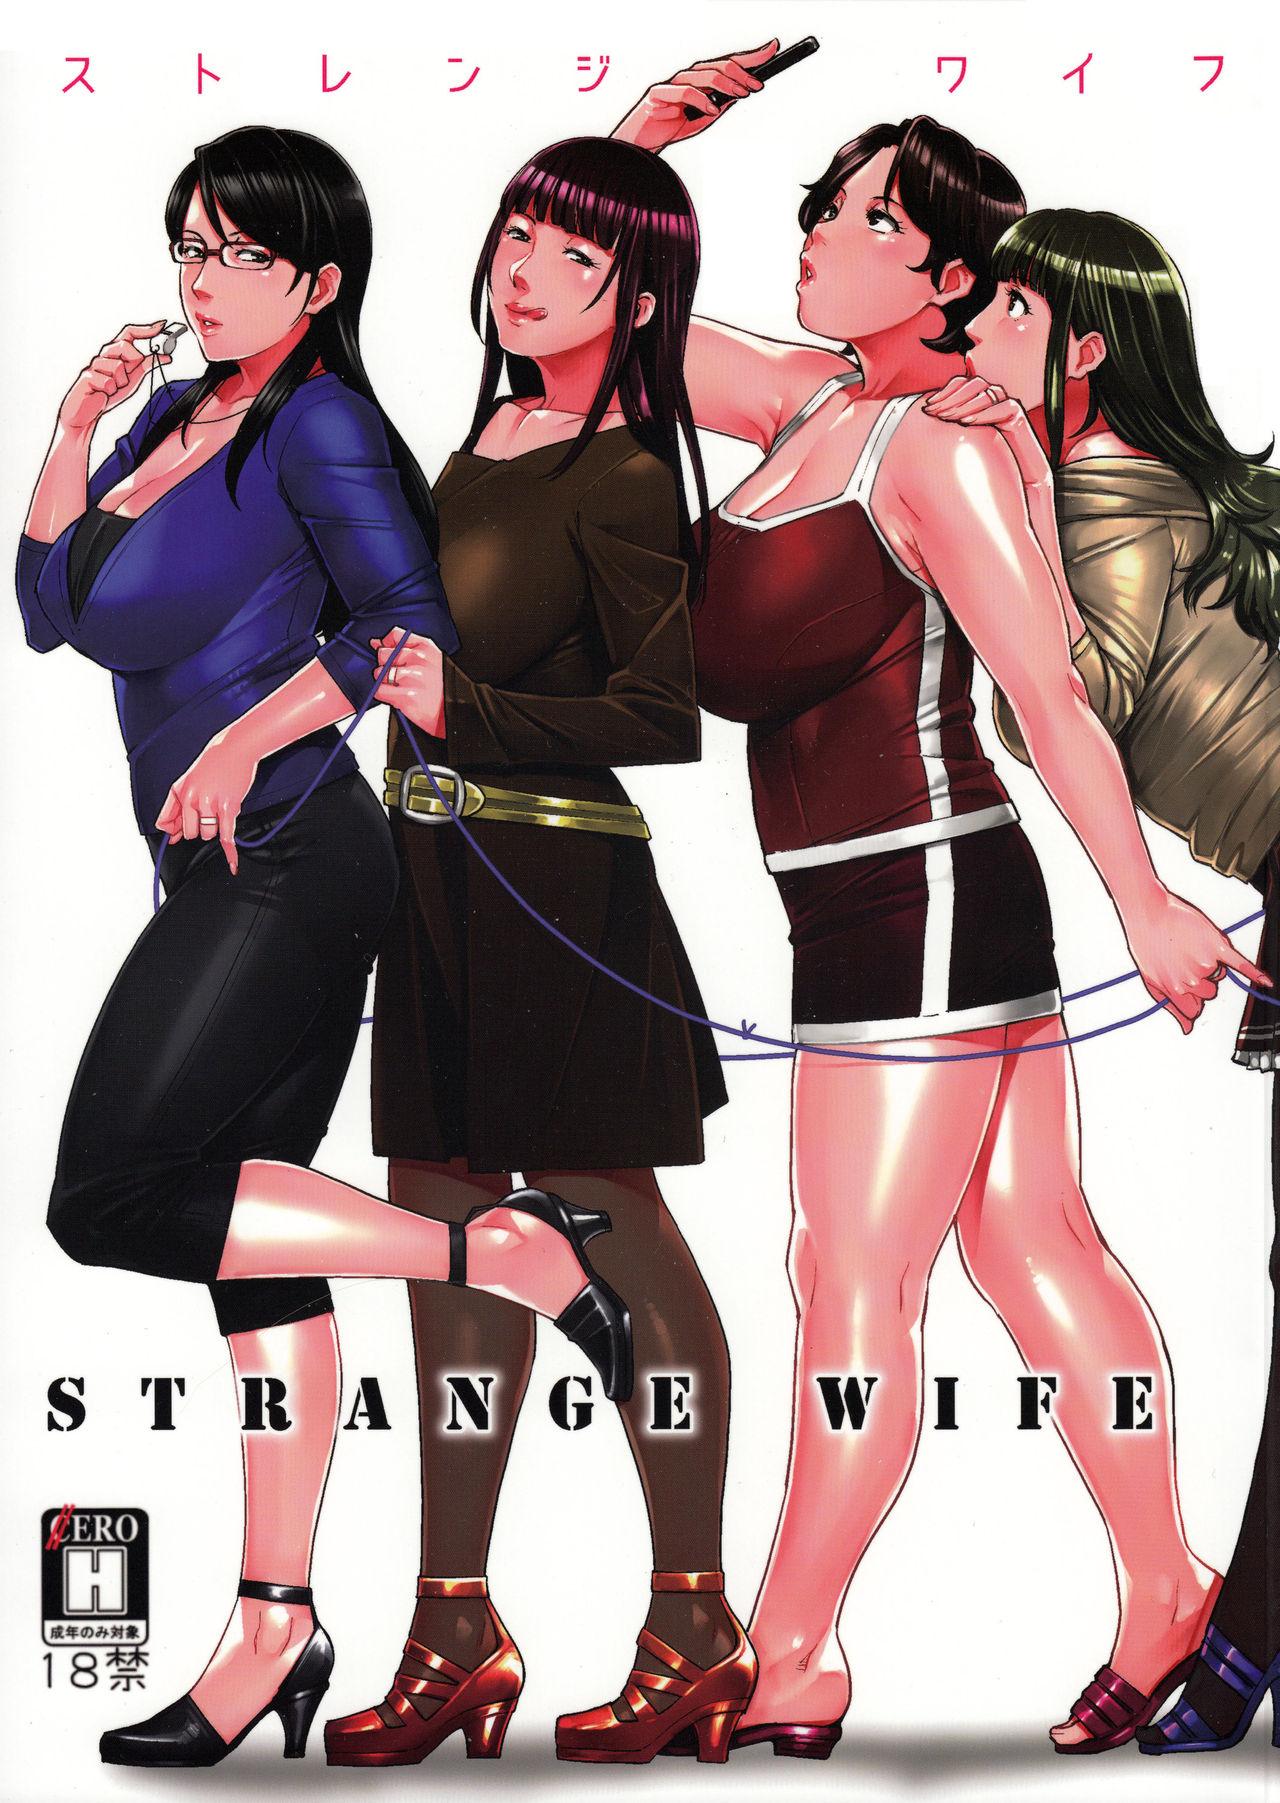 STRANGE WIFE 0